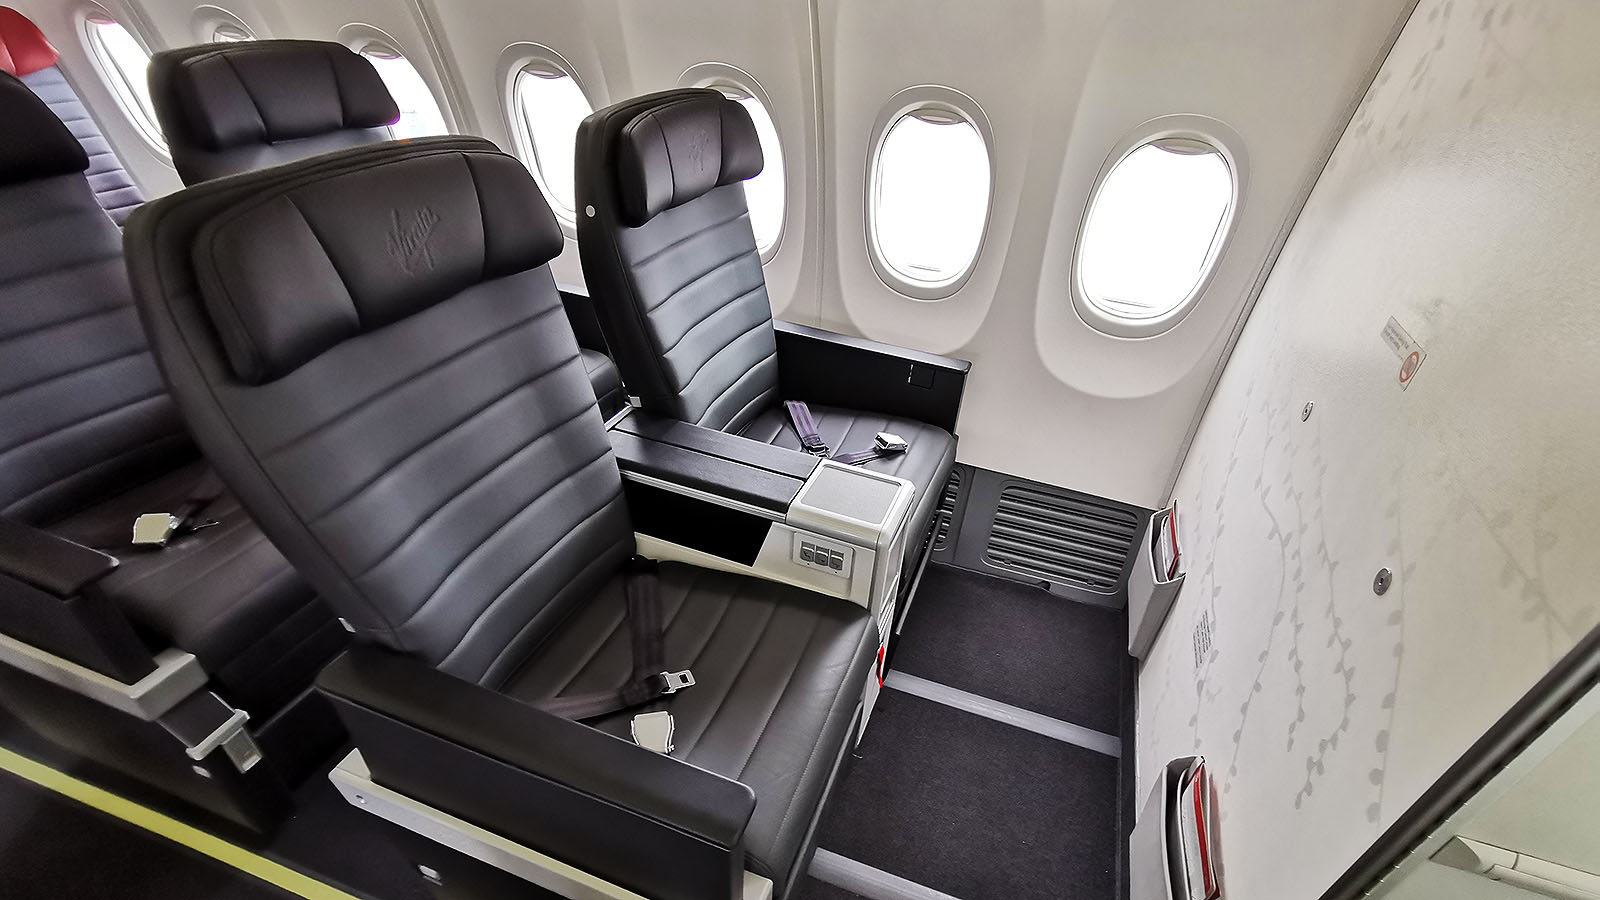 Virgin Australia's new Business Class seat